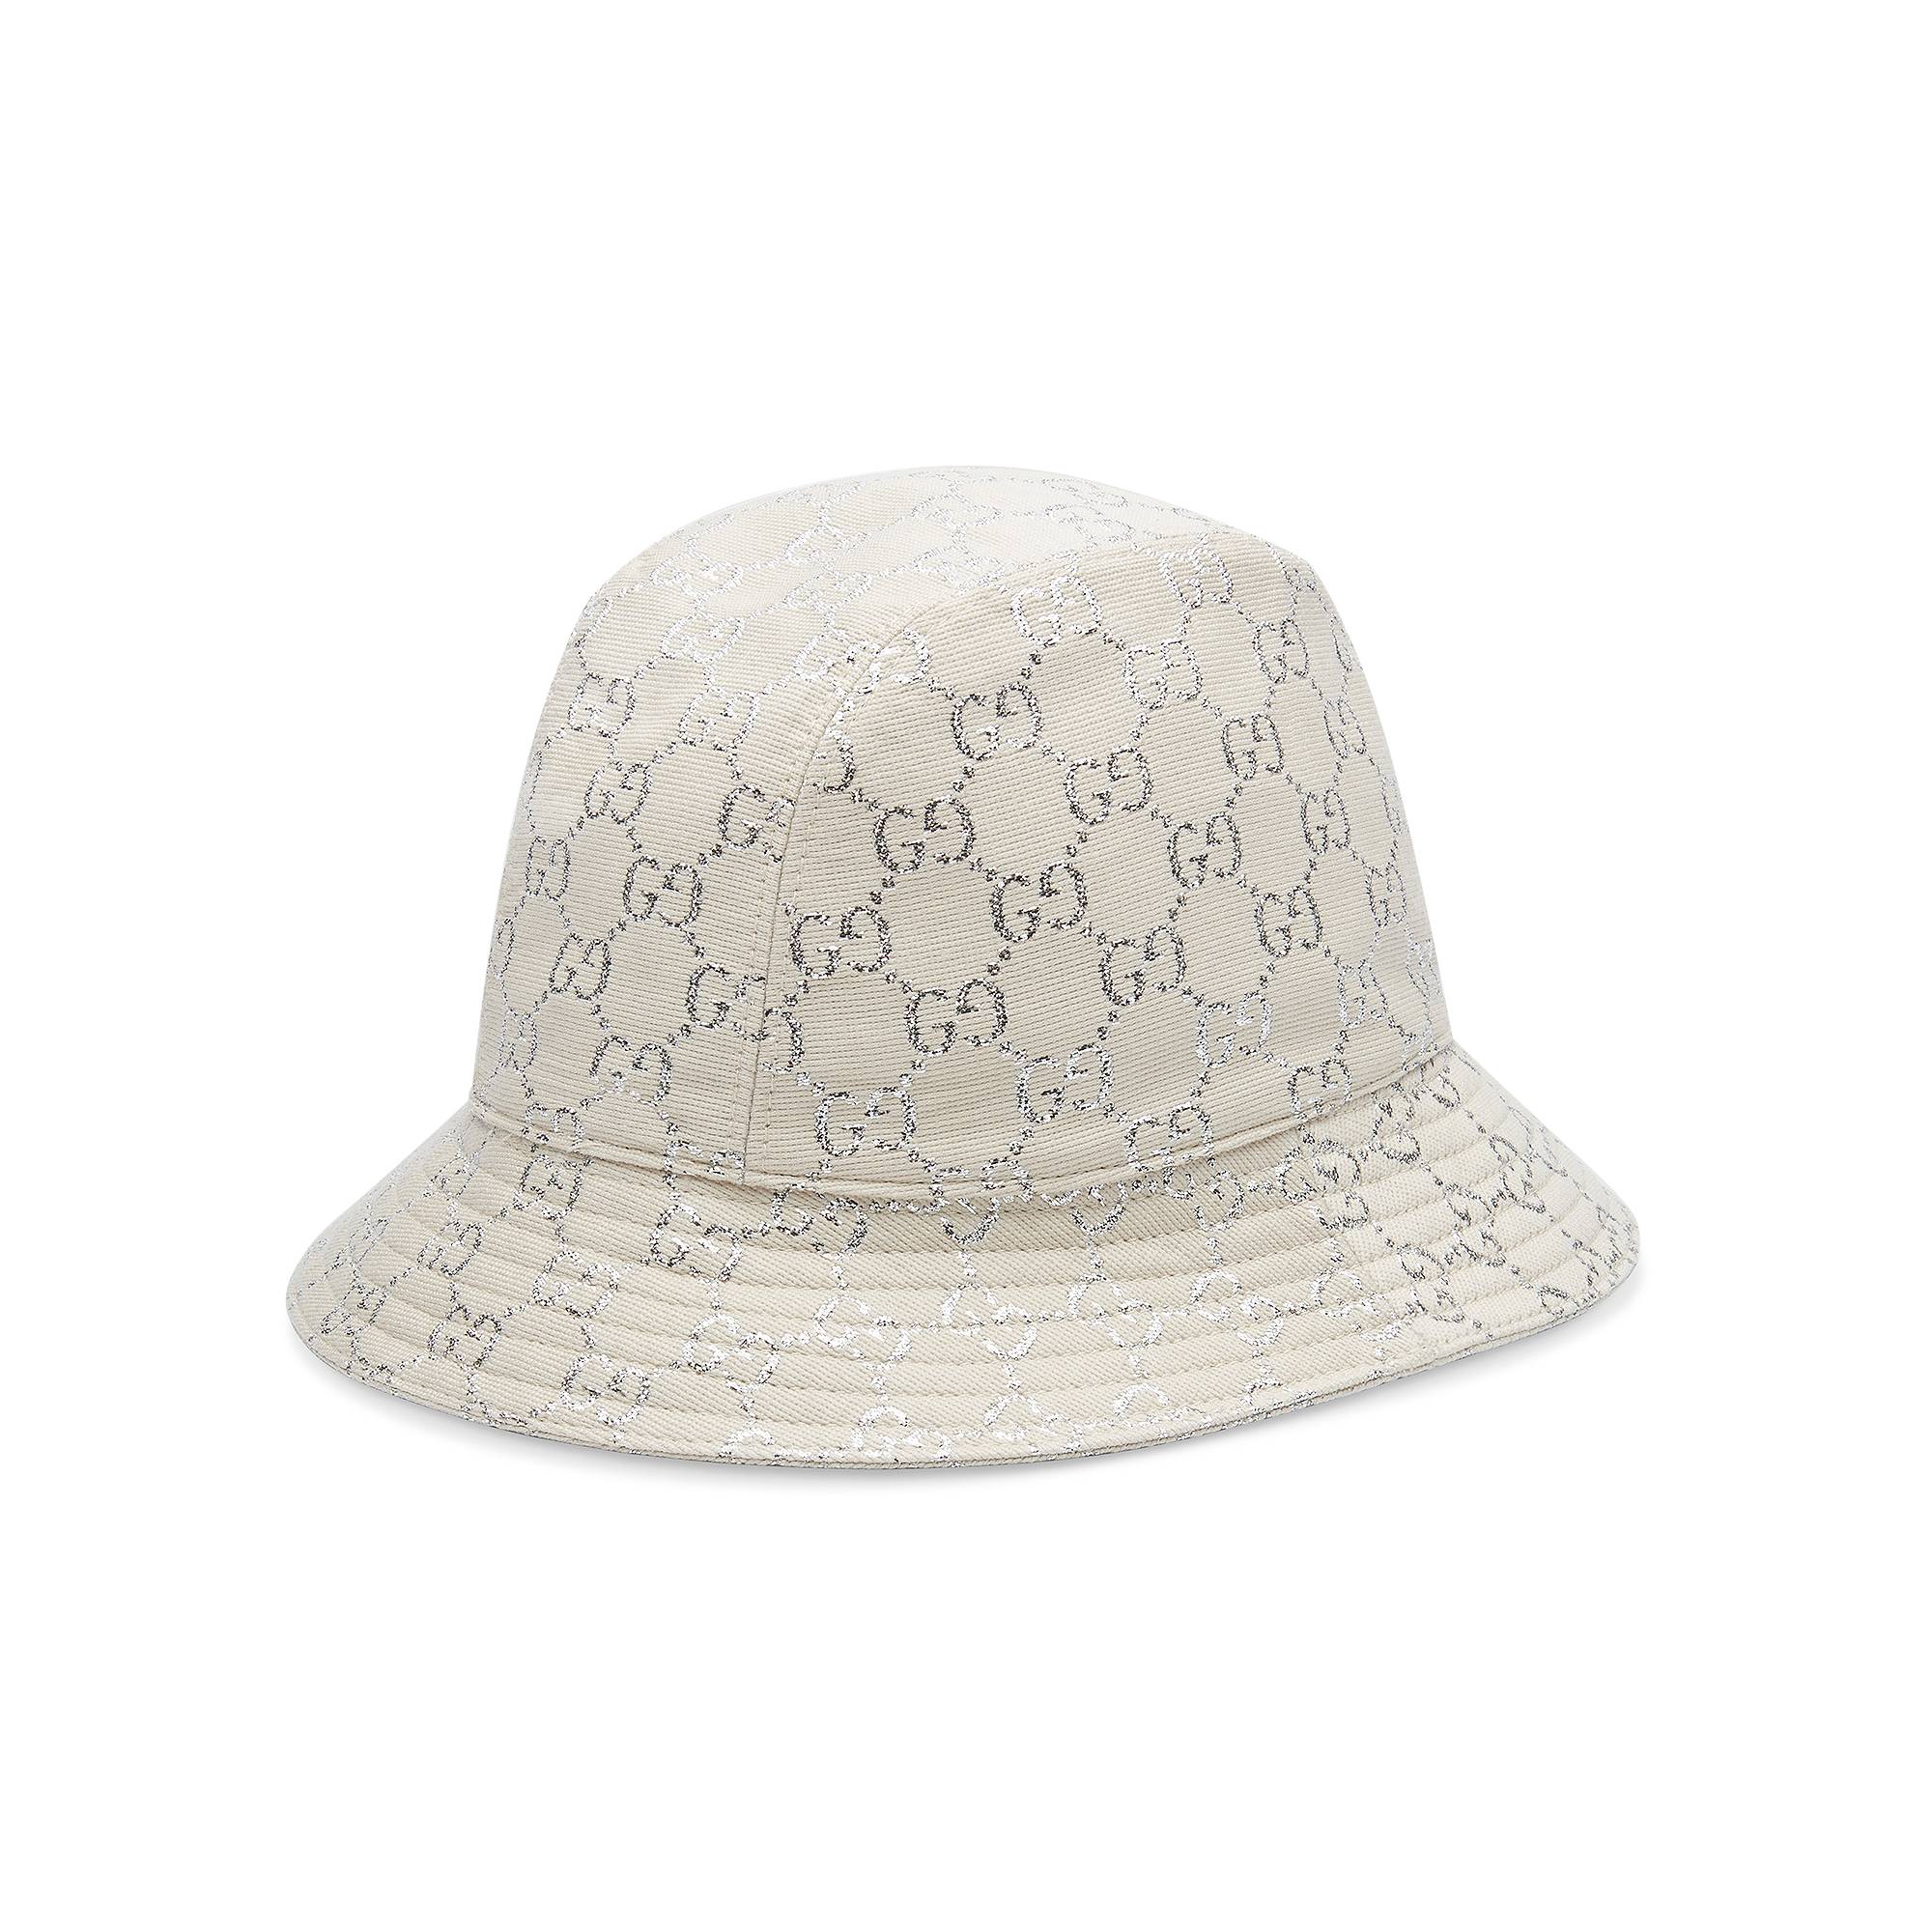 Gucci GG Lamé Bucket Hat 'White' - Gucci - 631951 3HK74 9000 | GOAT